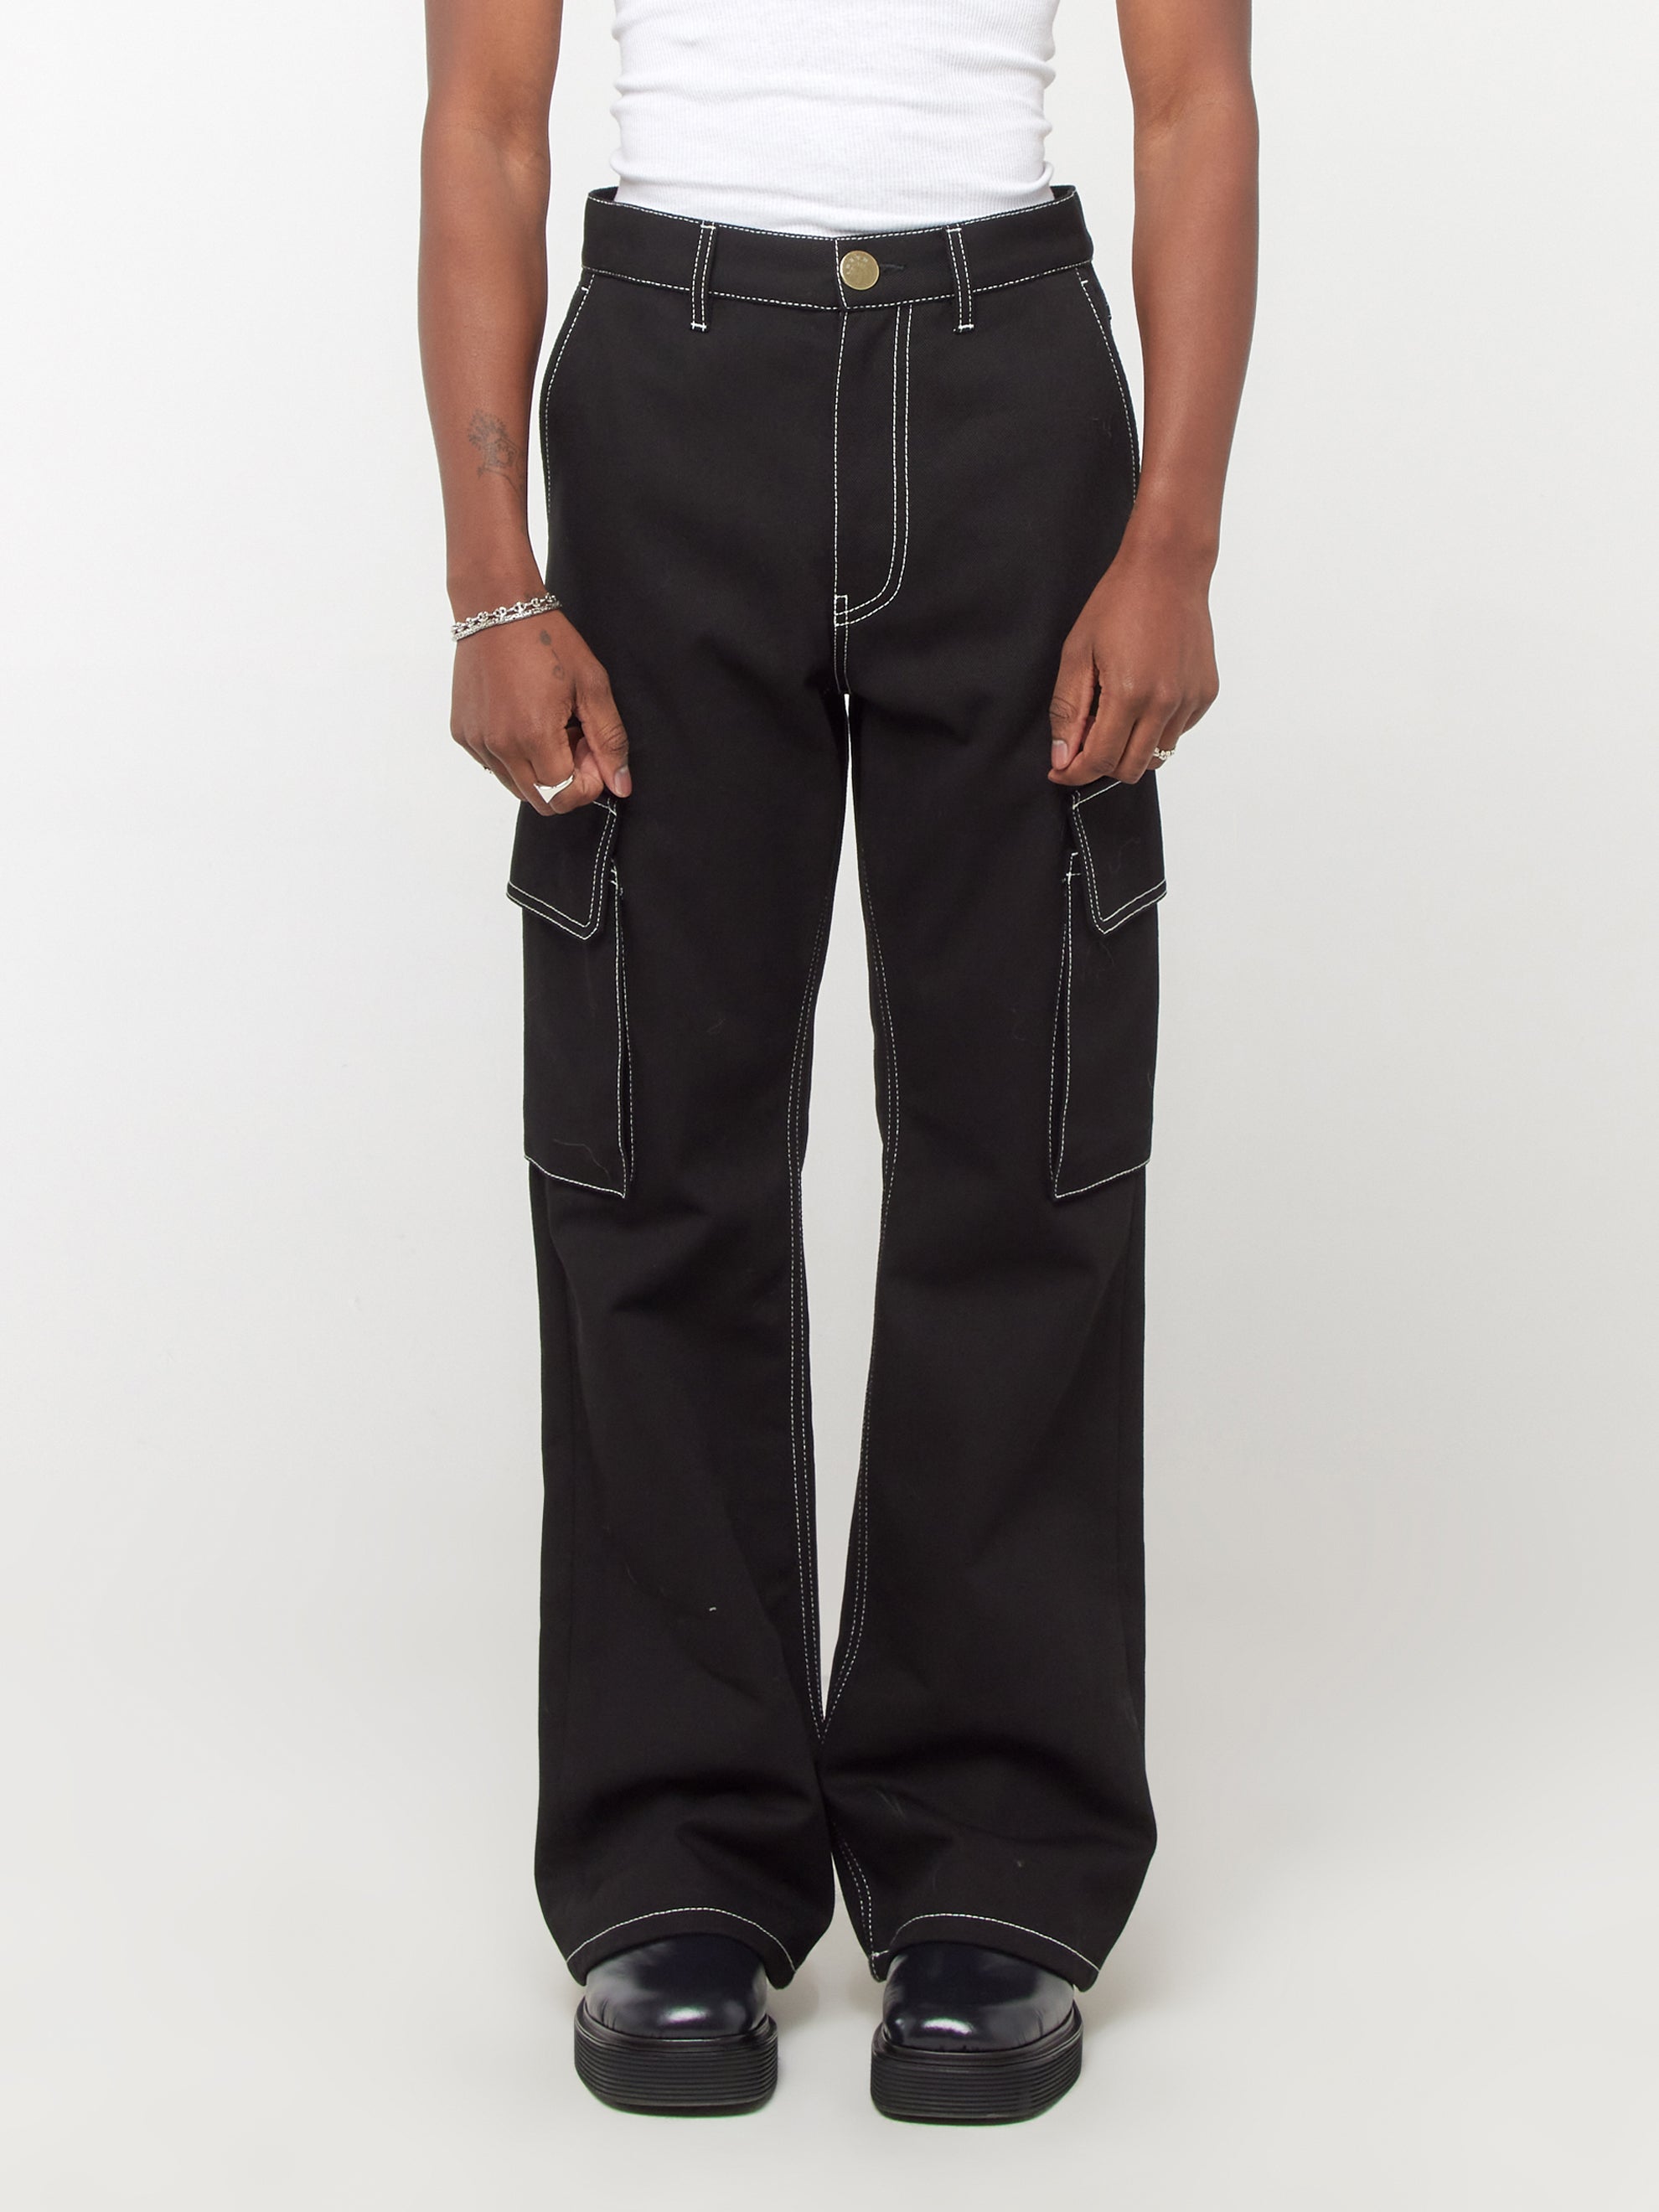 White Cargo Pants Men's Fashion Casual Stitching Leg Multi-pocket Pants  Pants - Walmart.com